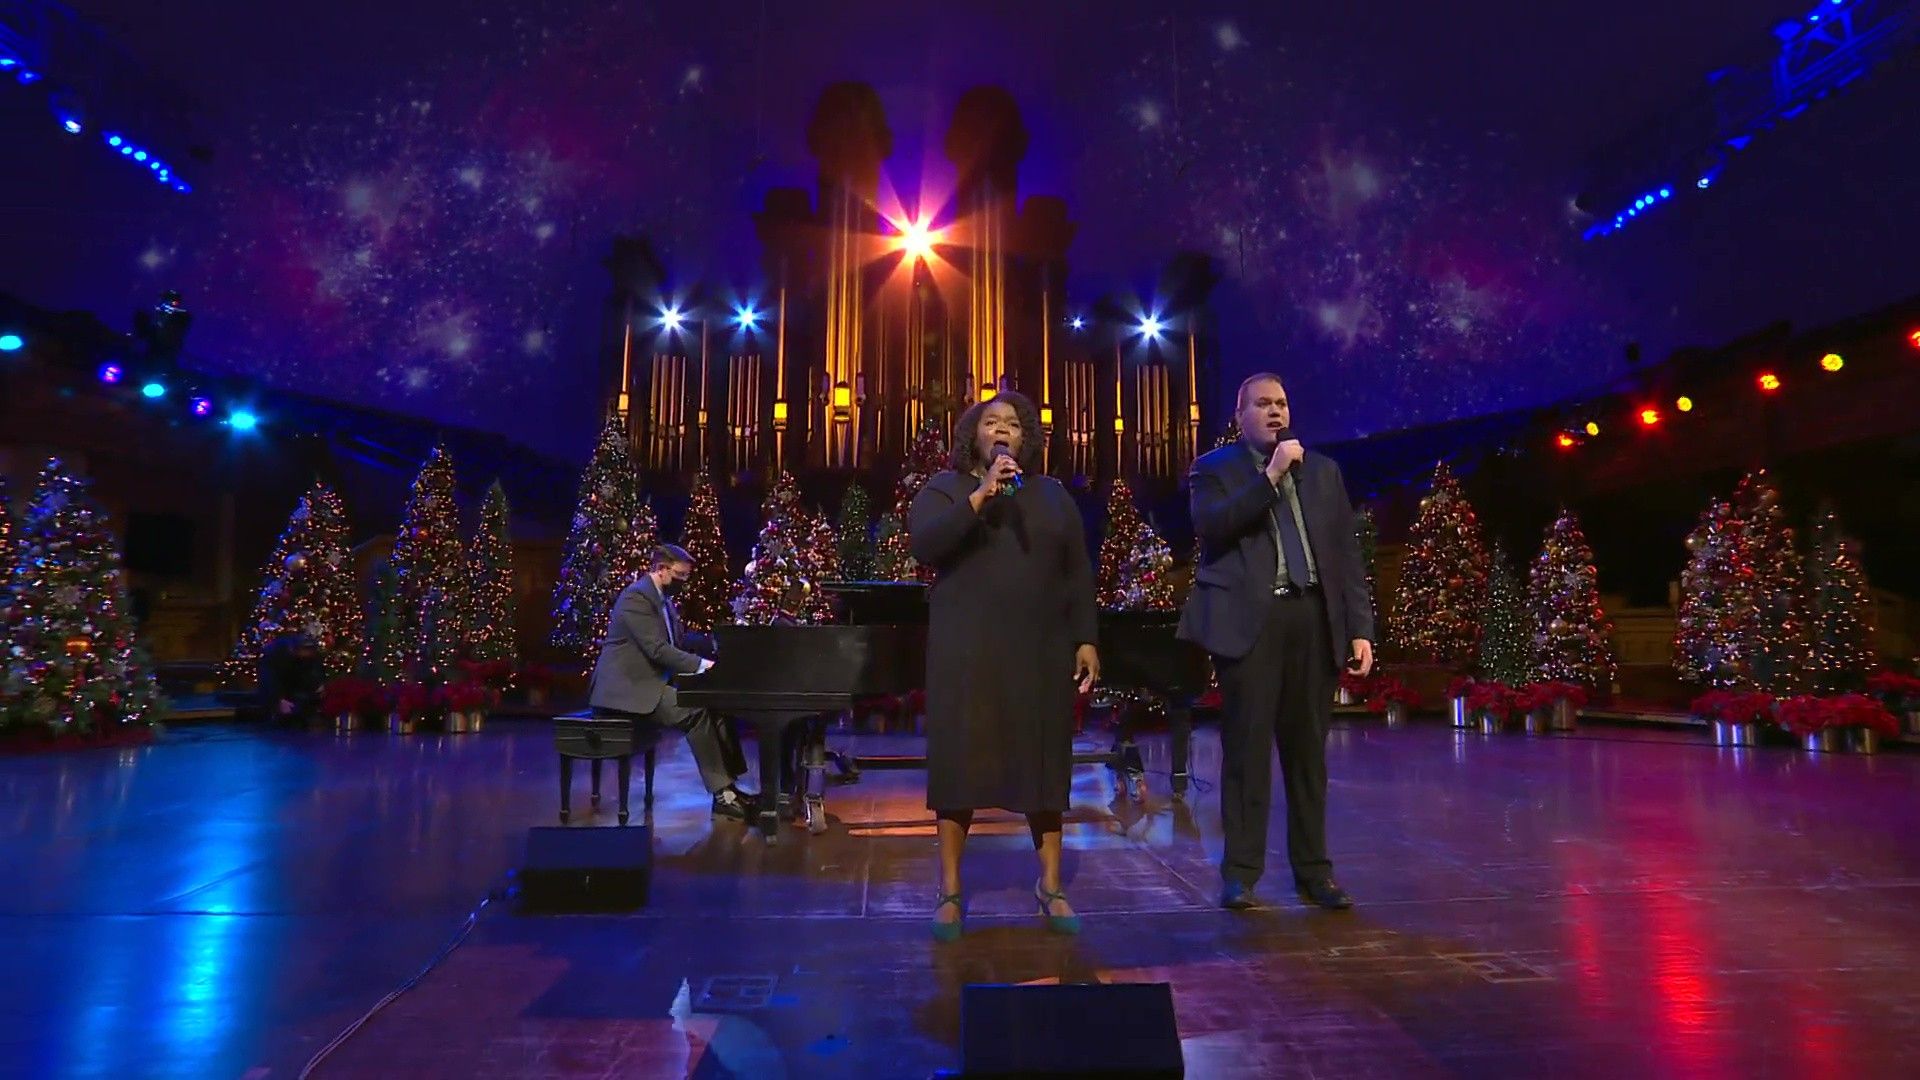 Jazz Noel – A Christmas Concert – First Congregational Church of